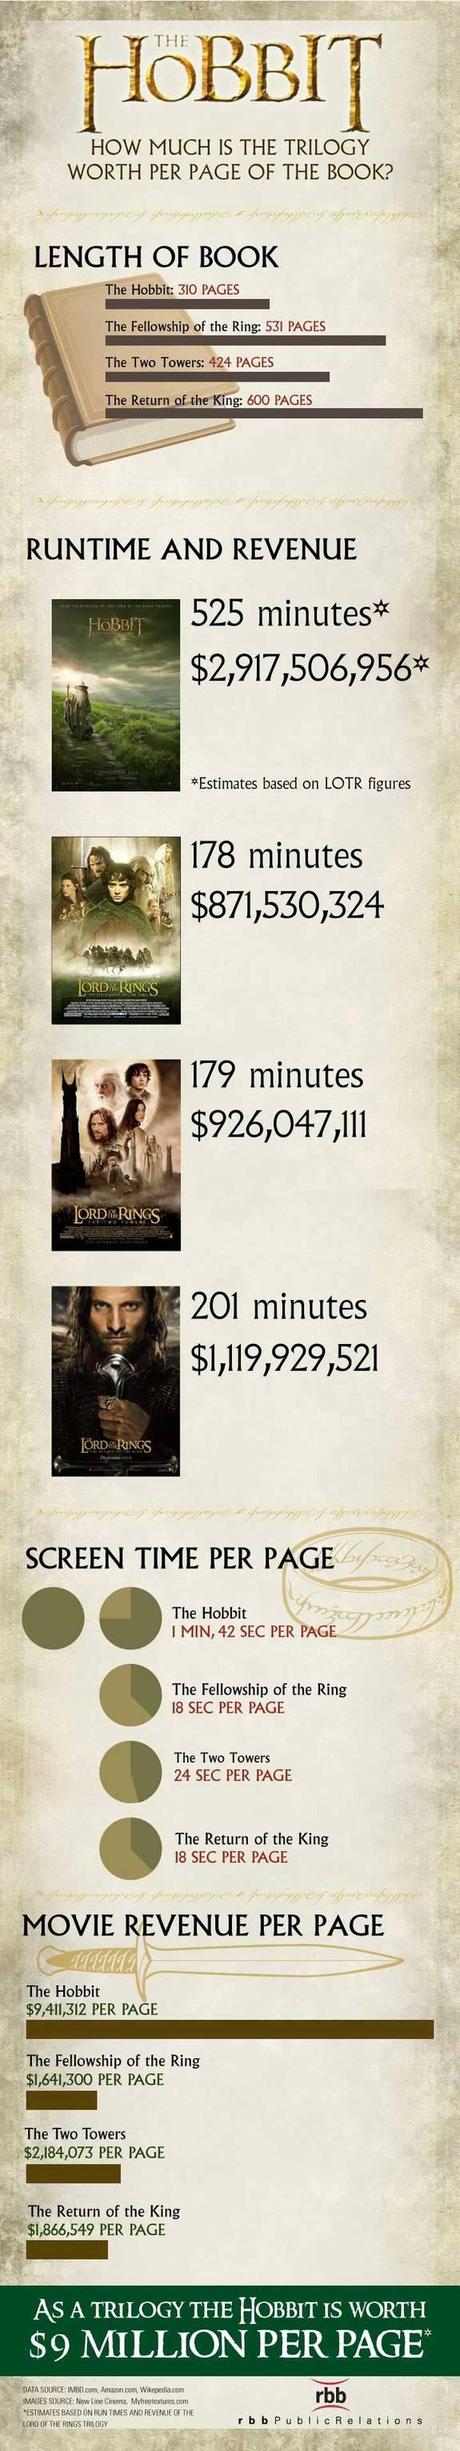 Hobbit movie trilogy infographic